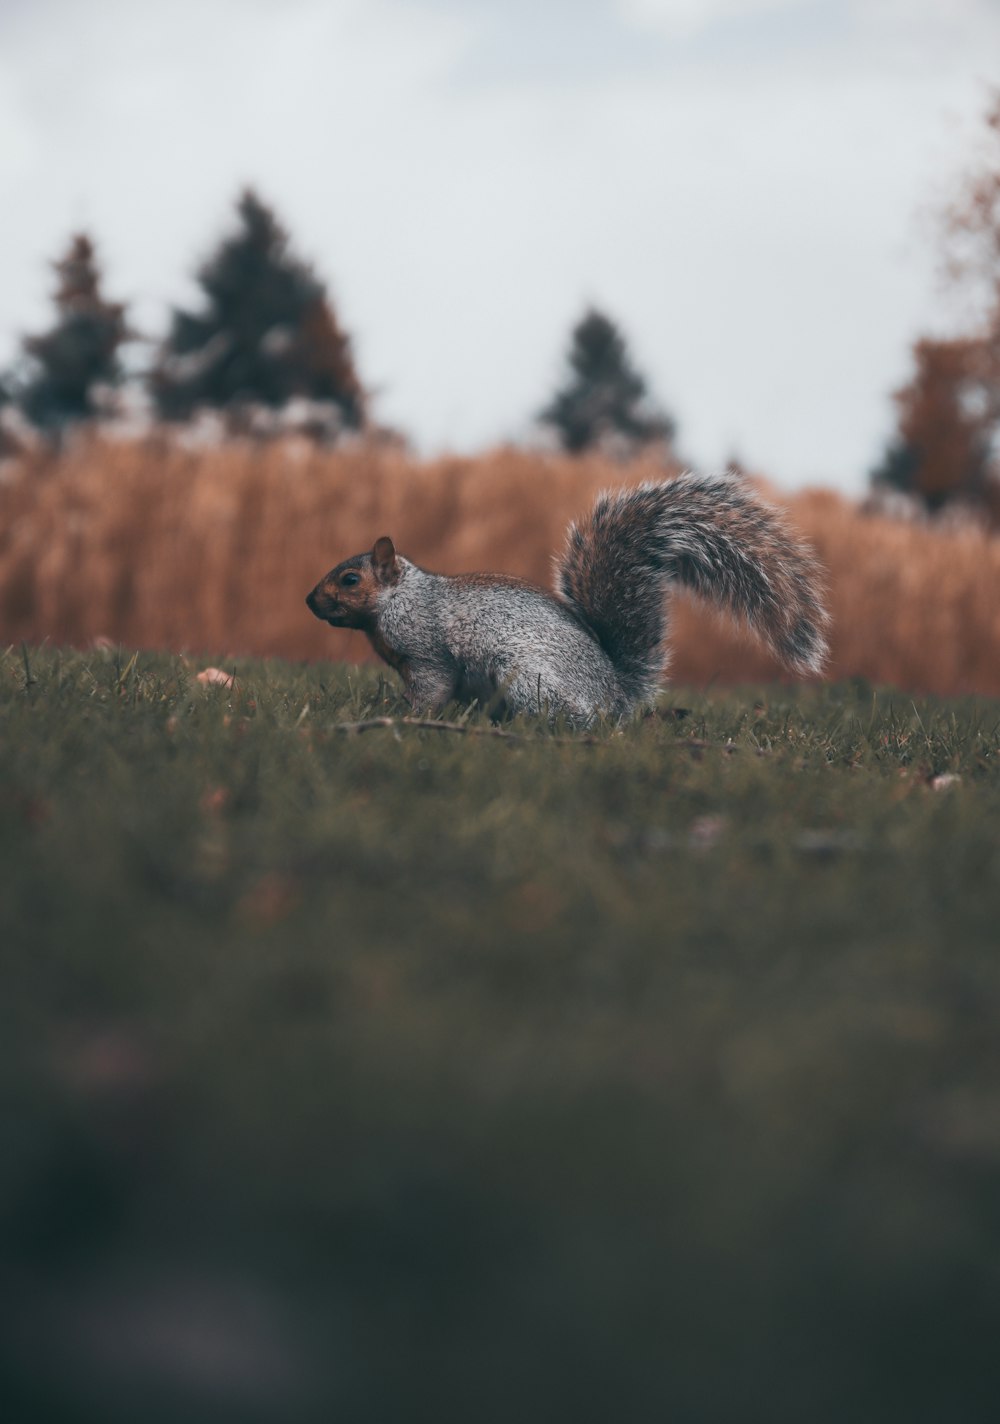 grey squirrel on grass